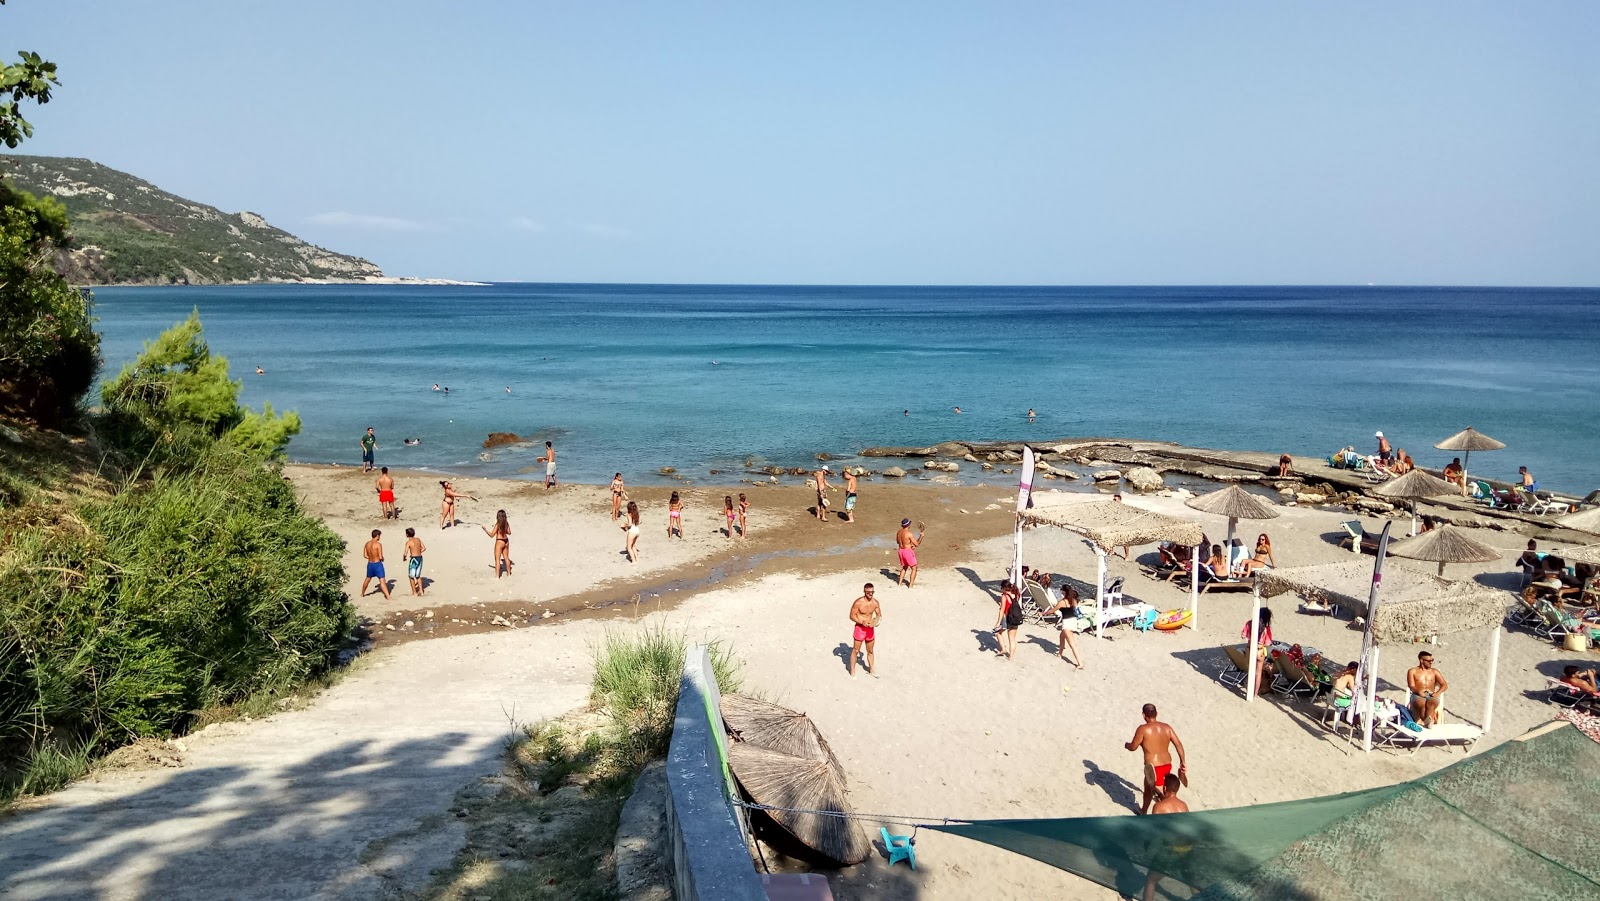 Foto de Soutsini beach con muy limpio nivel de limpieza